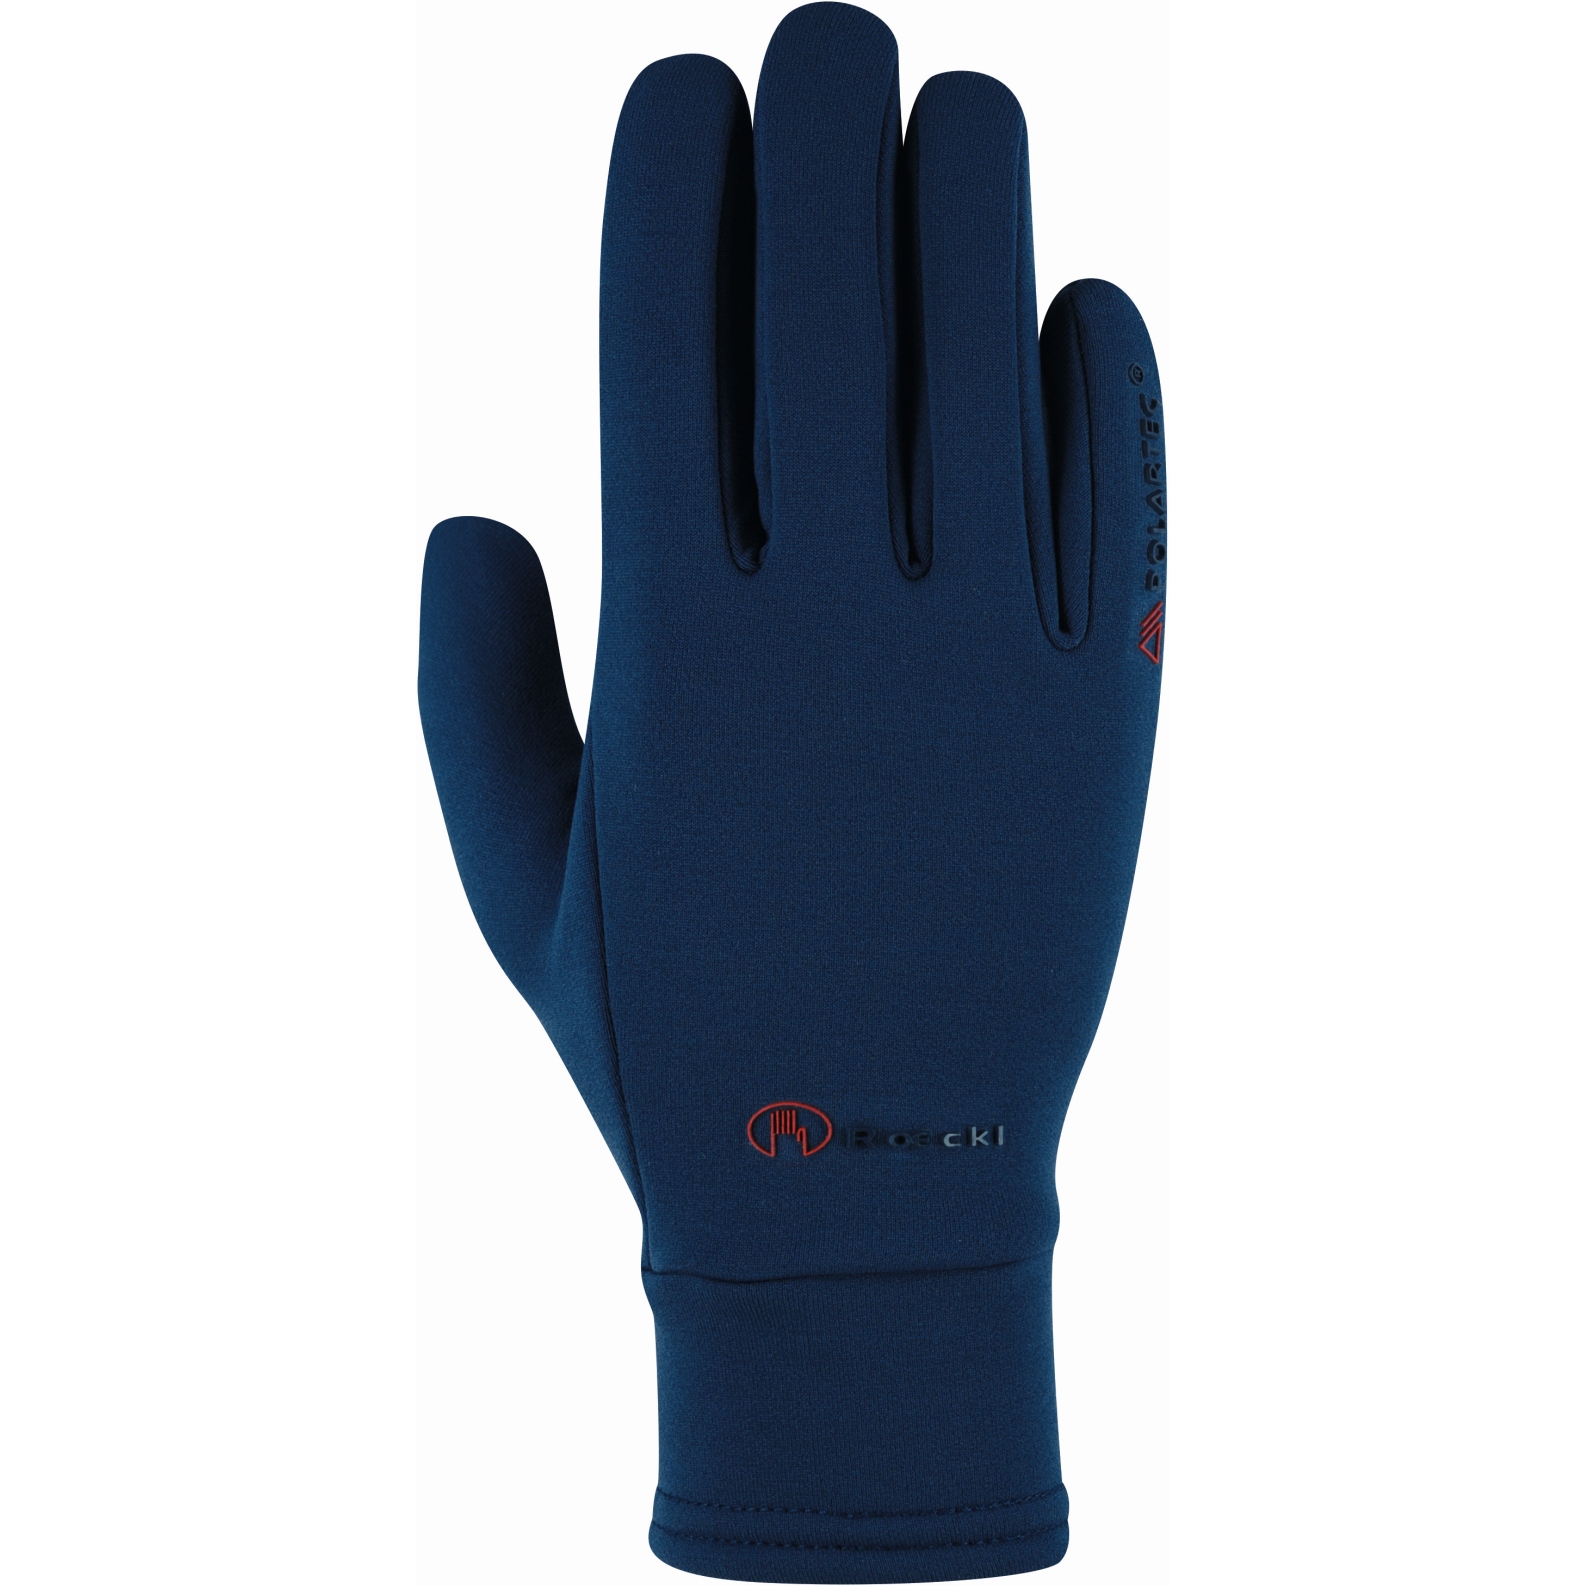 Image of Roeckl Sports Kasa Winter Gloves - navy blue 0590